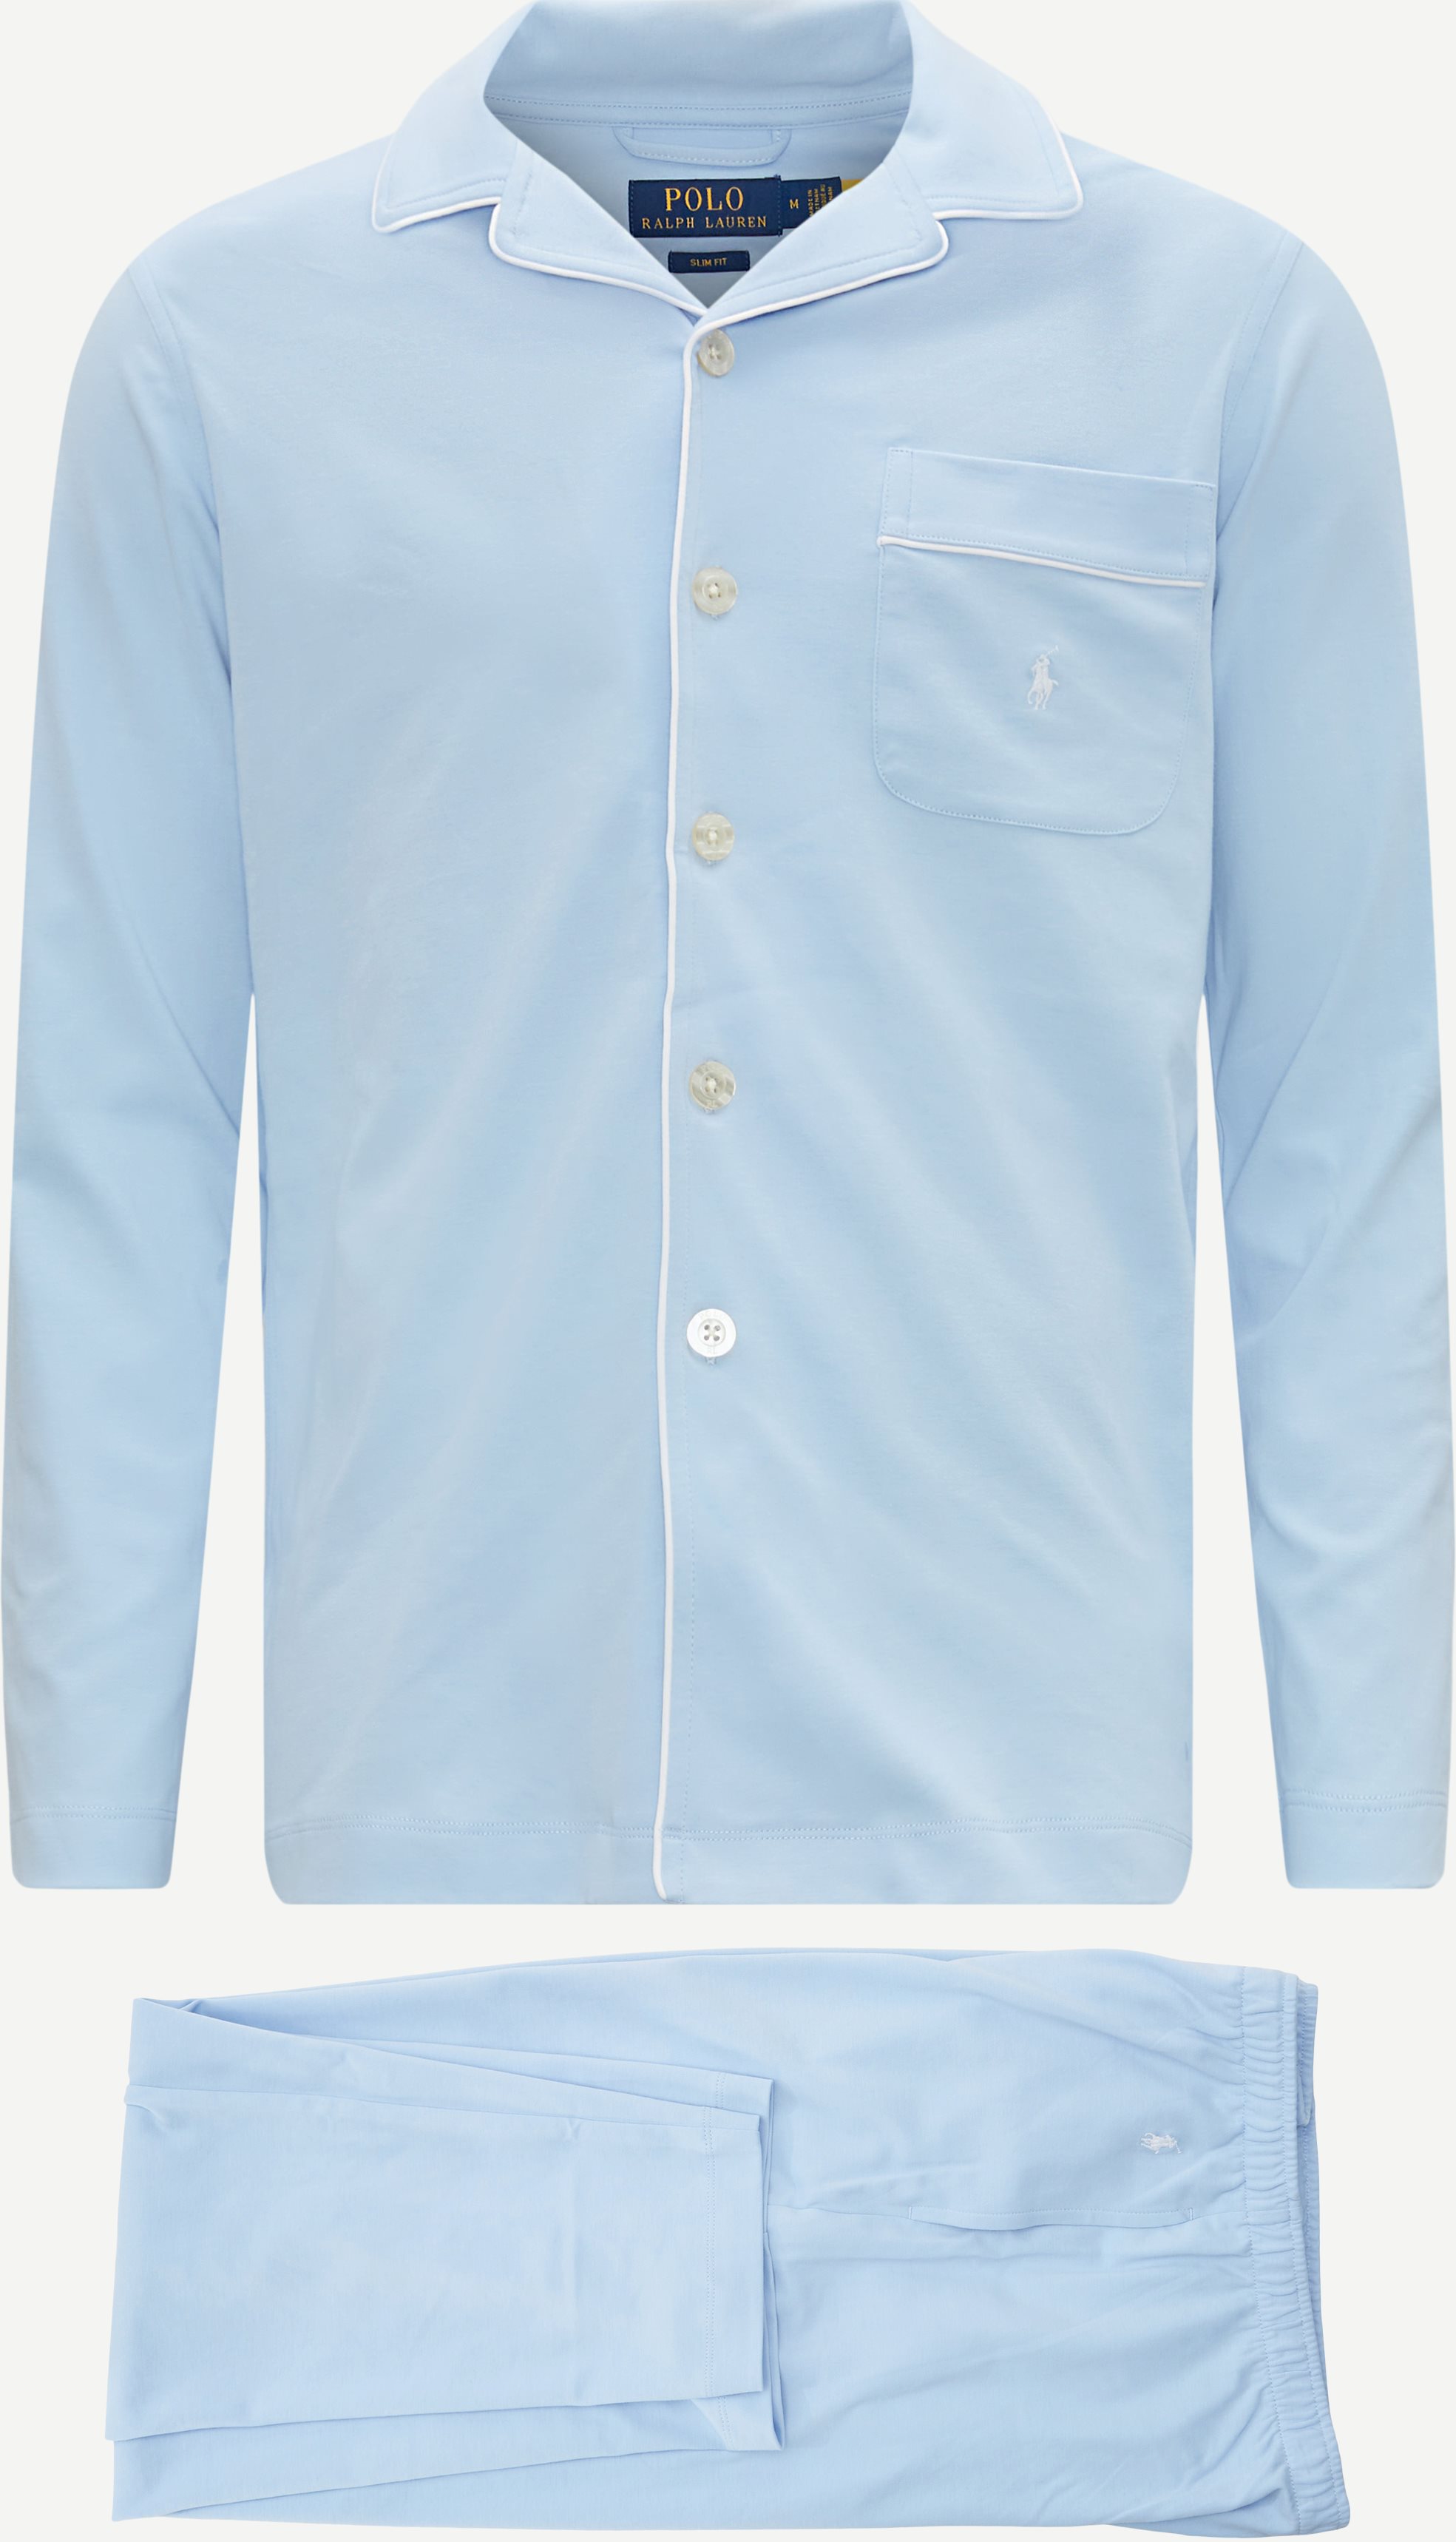 Polo Ralph Lauren Underkläder 714881705 Blå